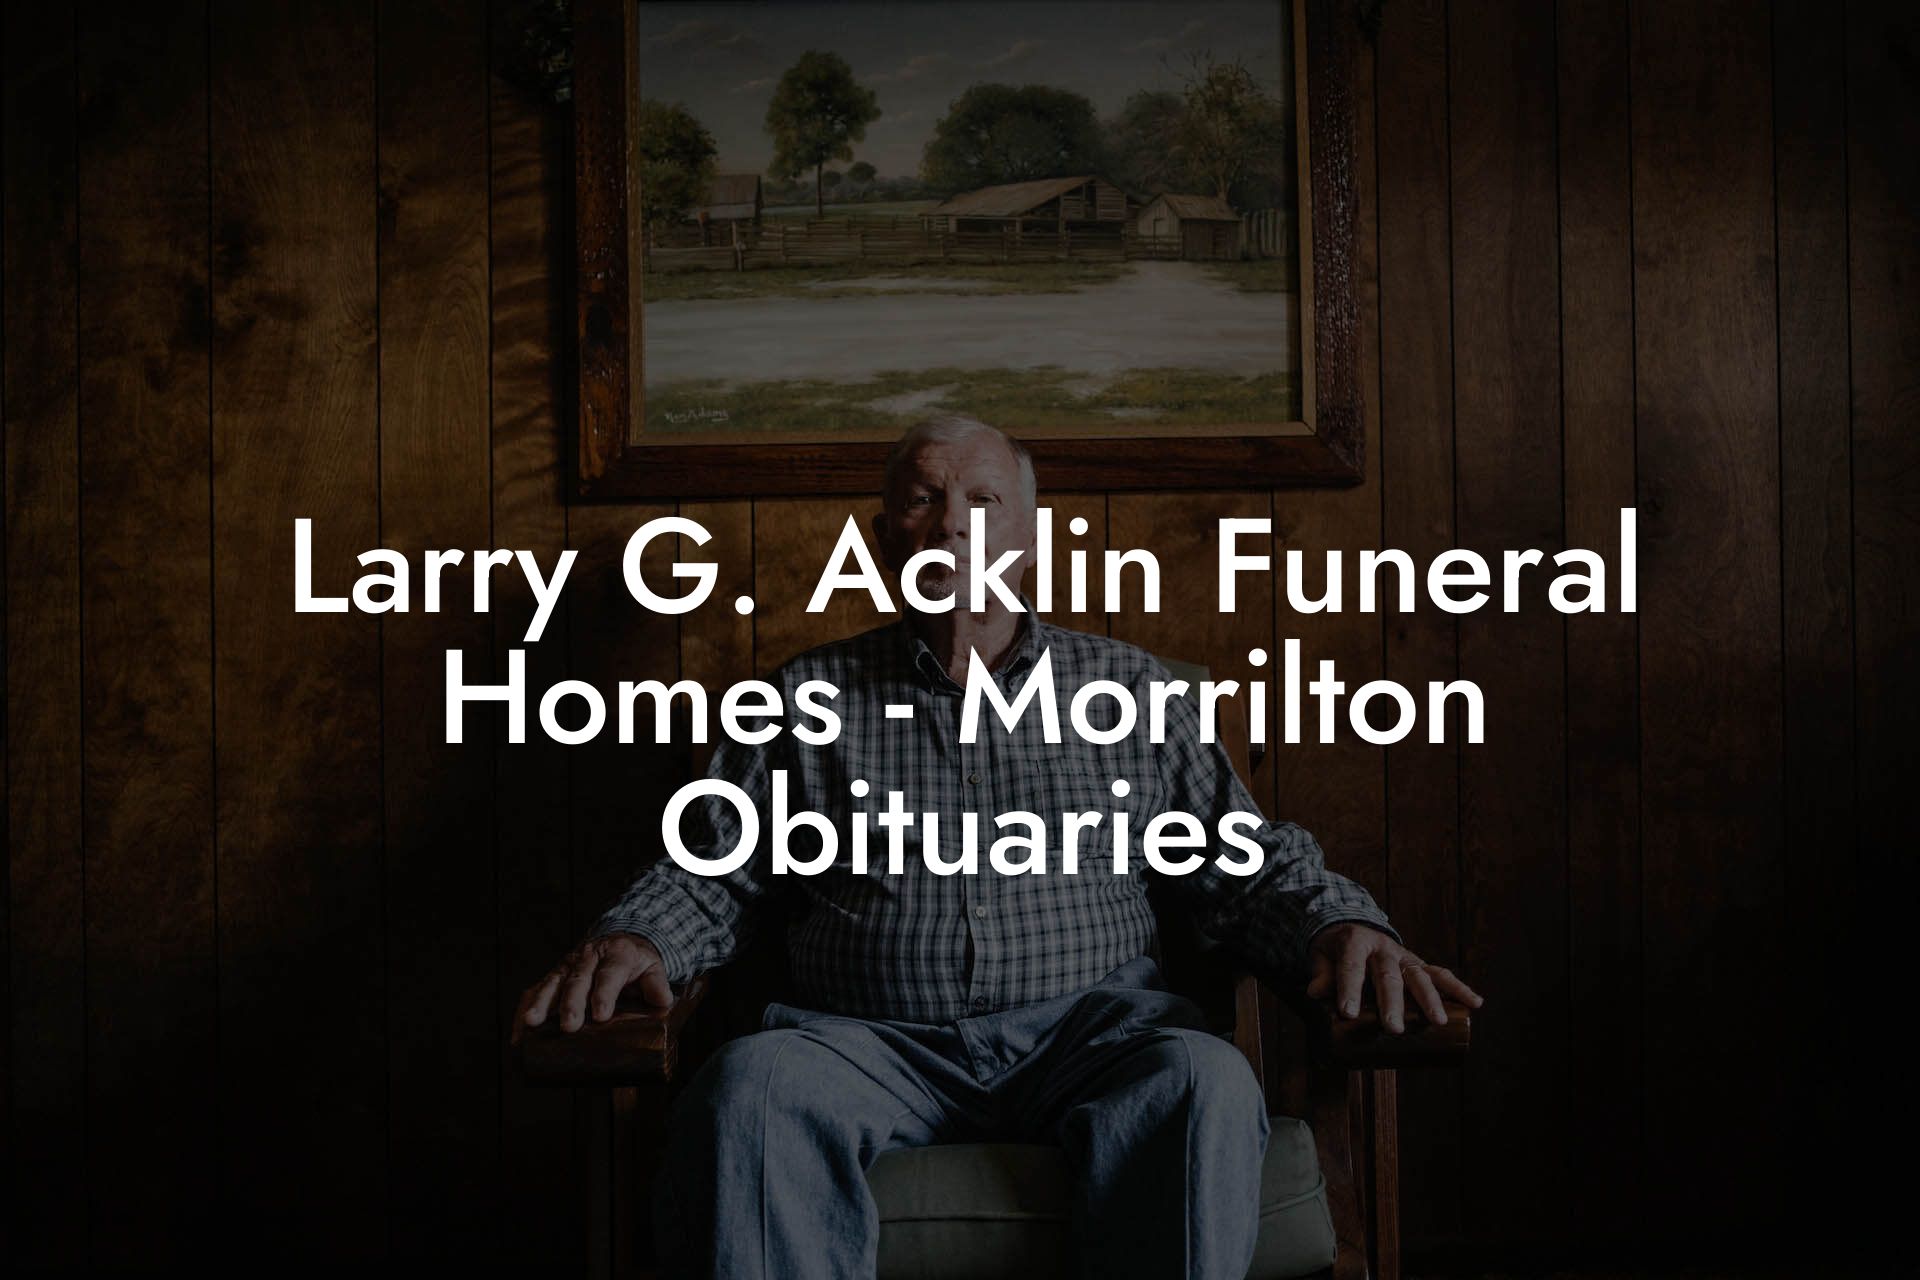 Larry G. Acklin Funeral Homes - Morrilton Obituaries